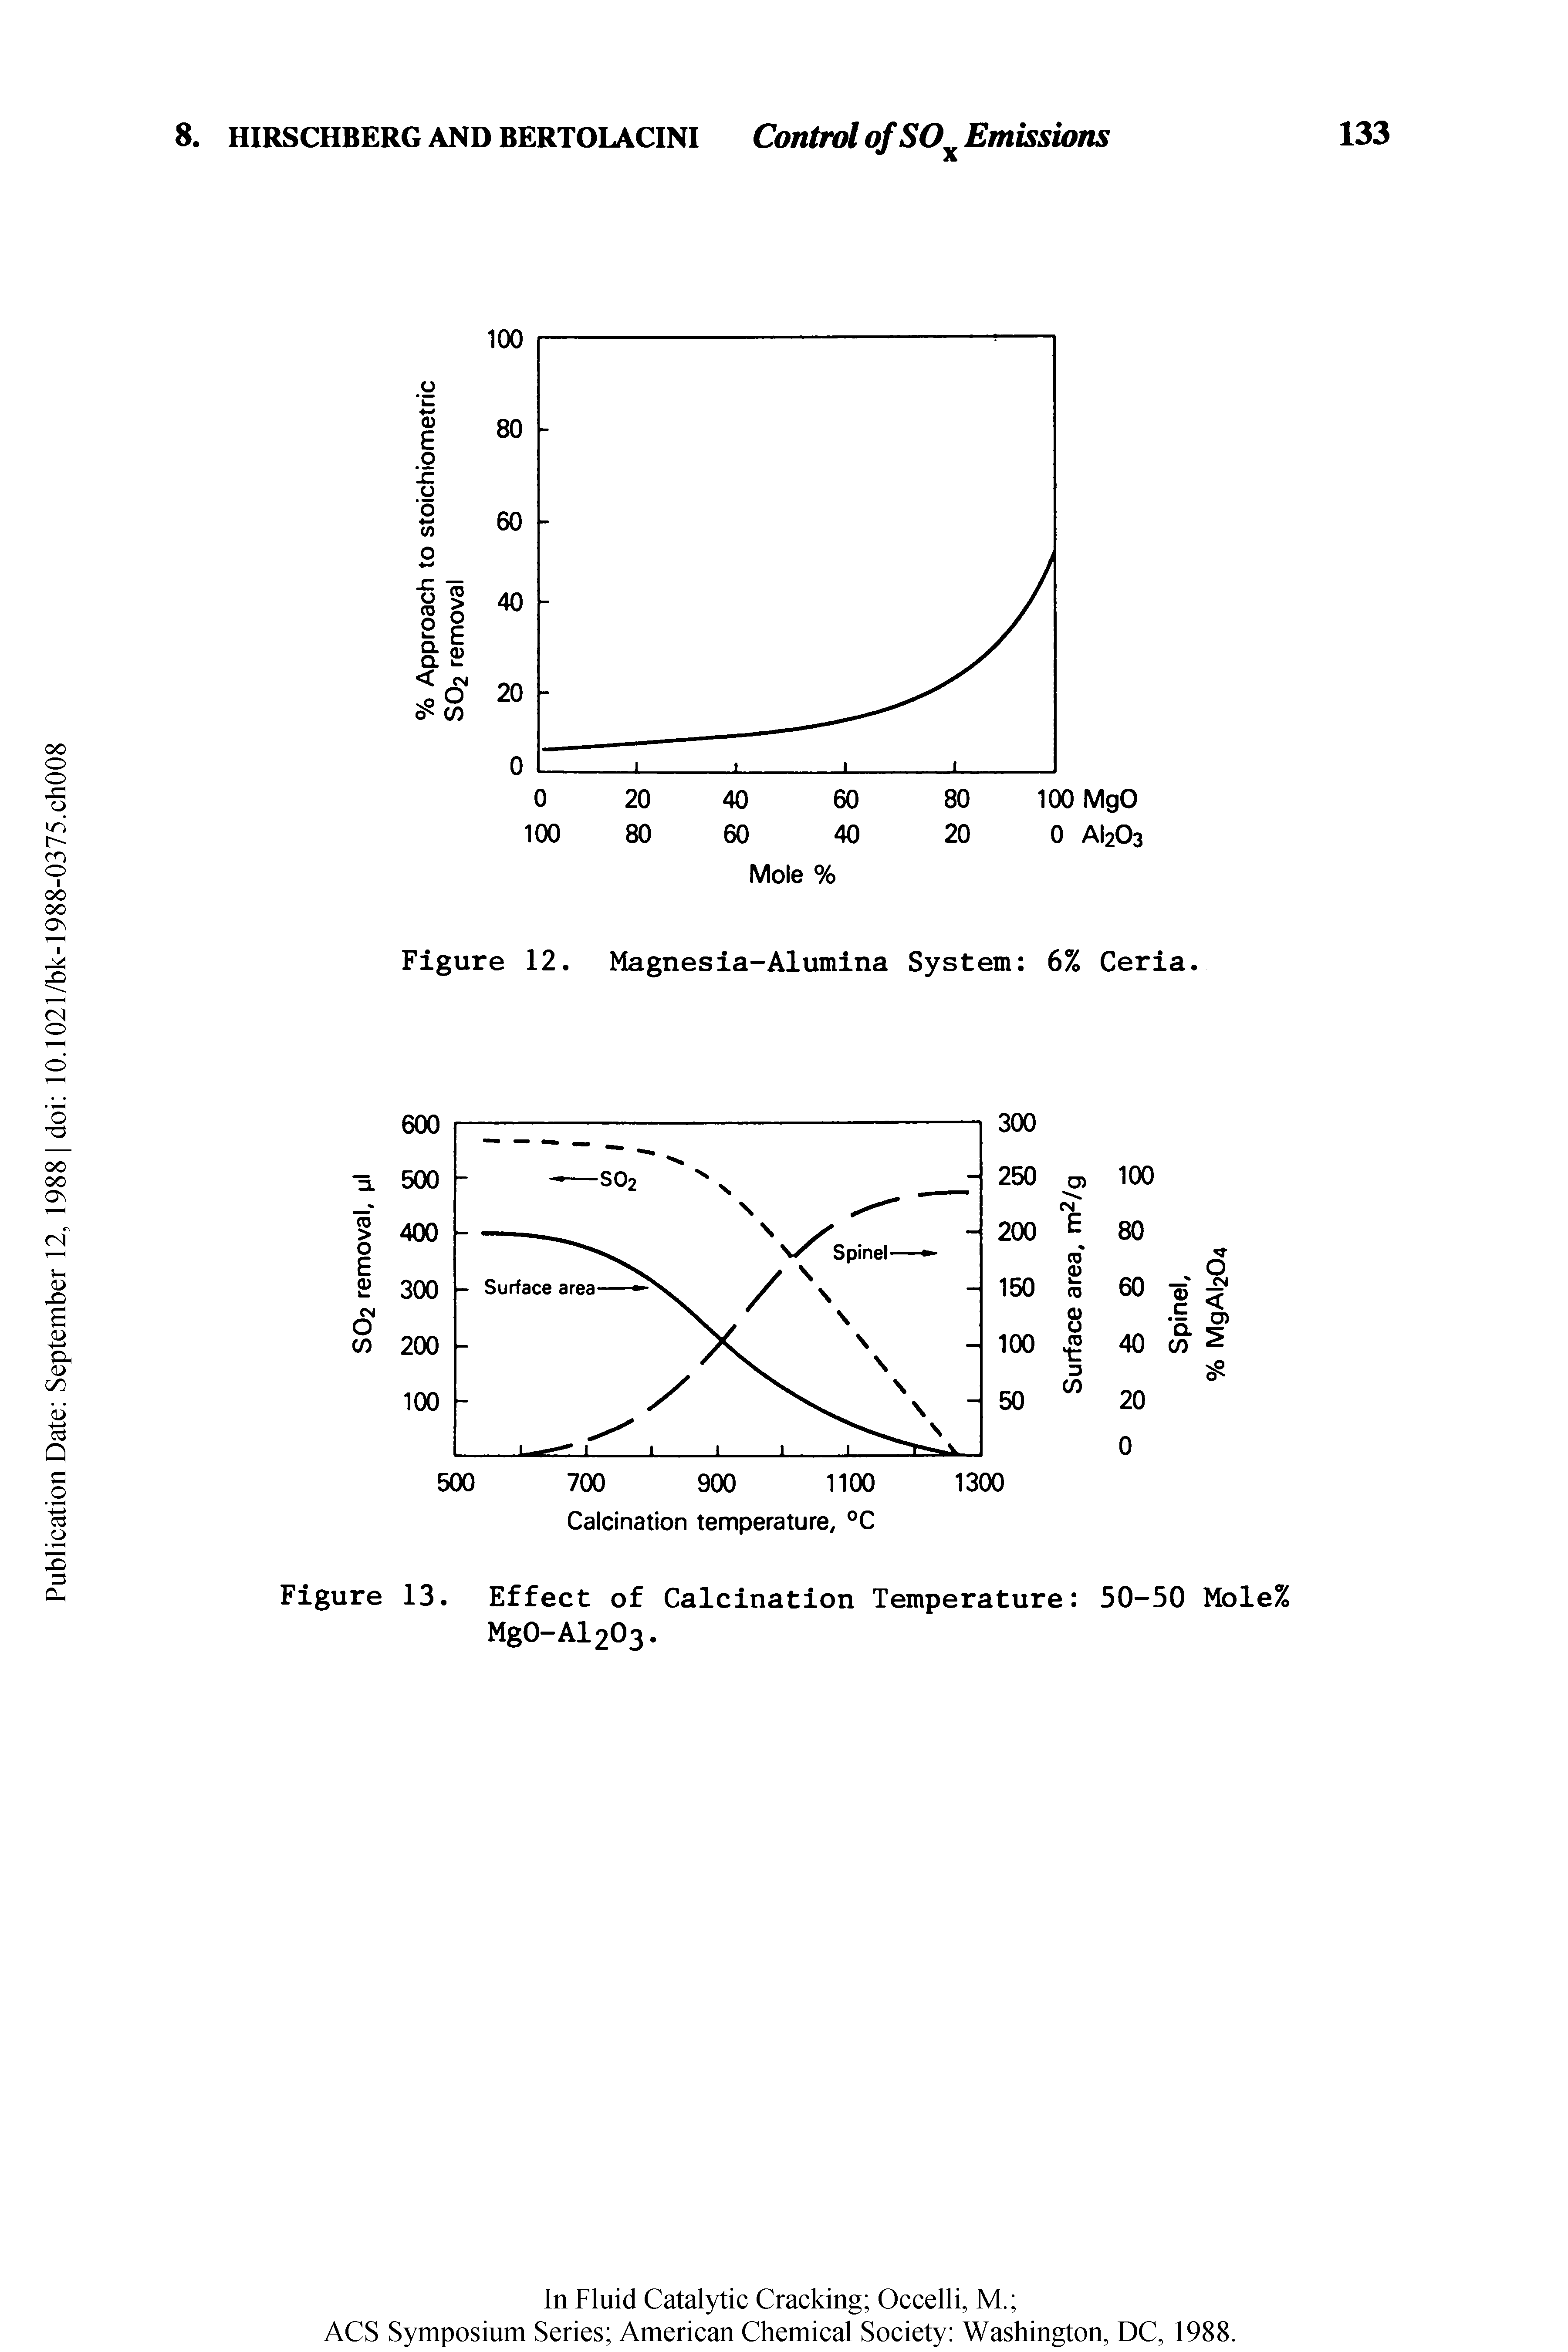 Figure 13. Effect of Calcination Temperature 50-50 Mole% MgO-Al203.